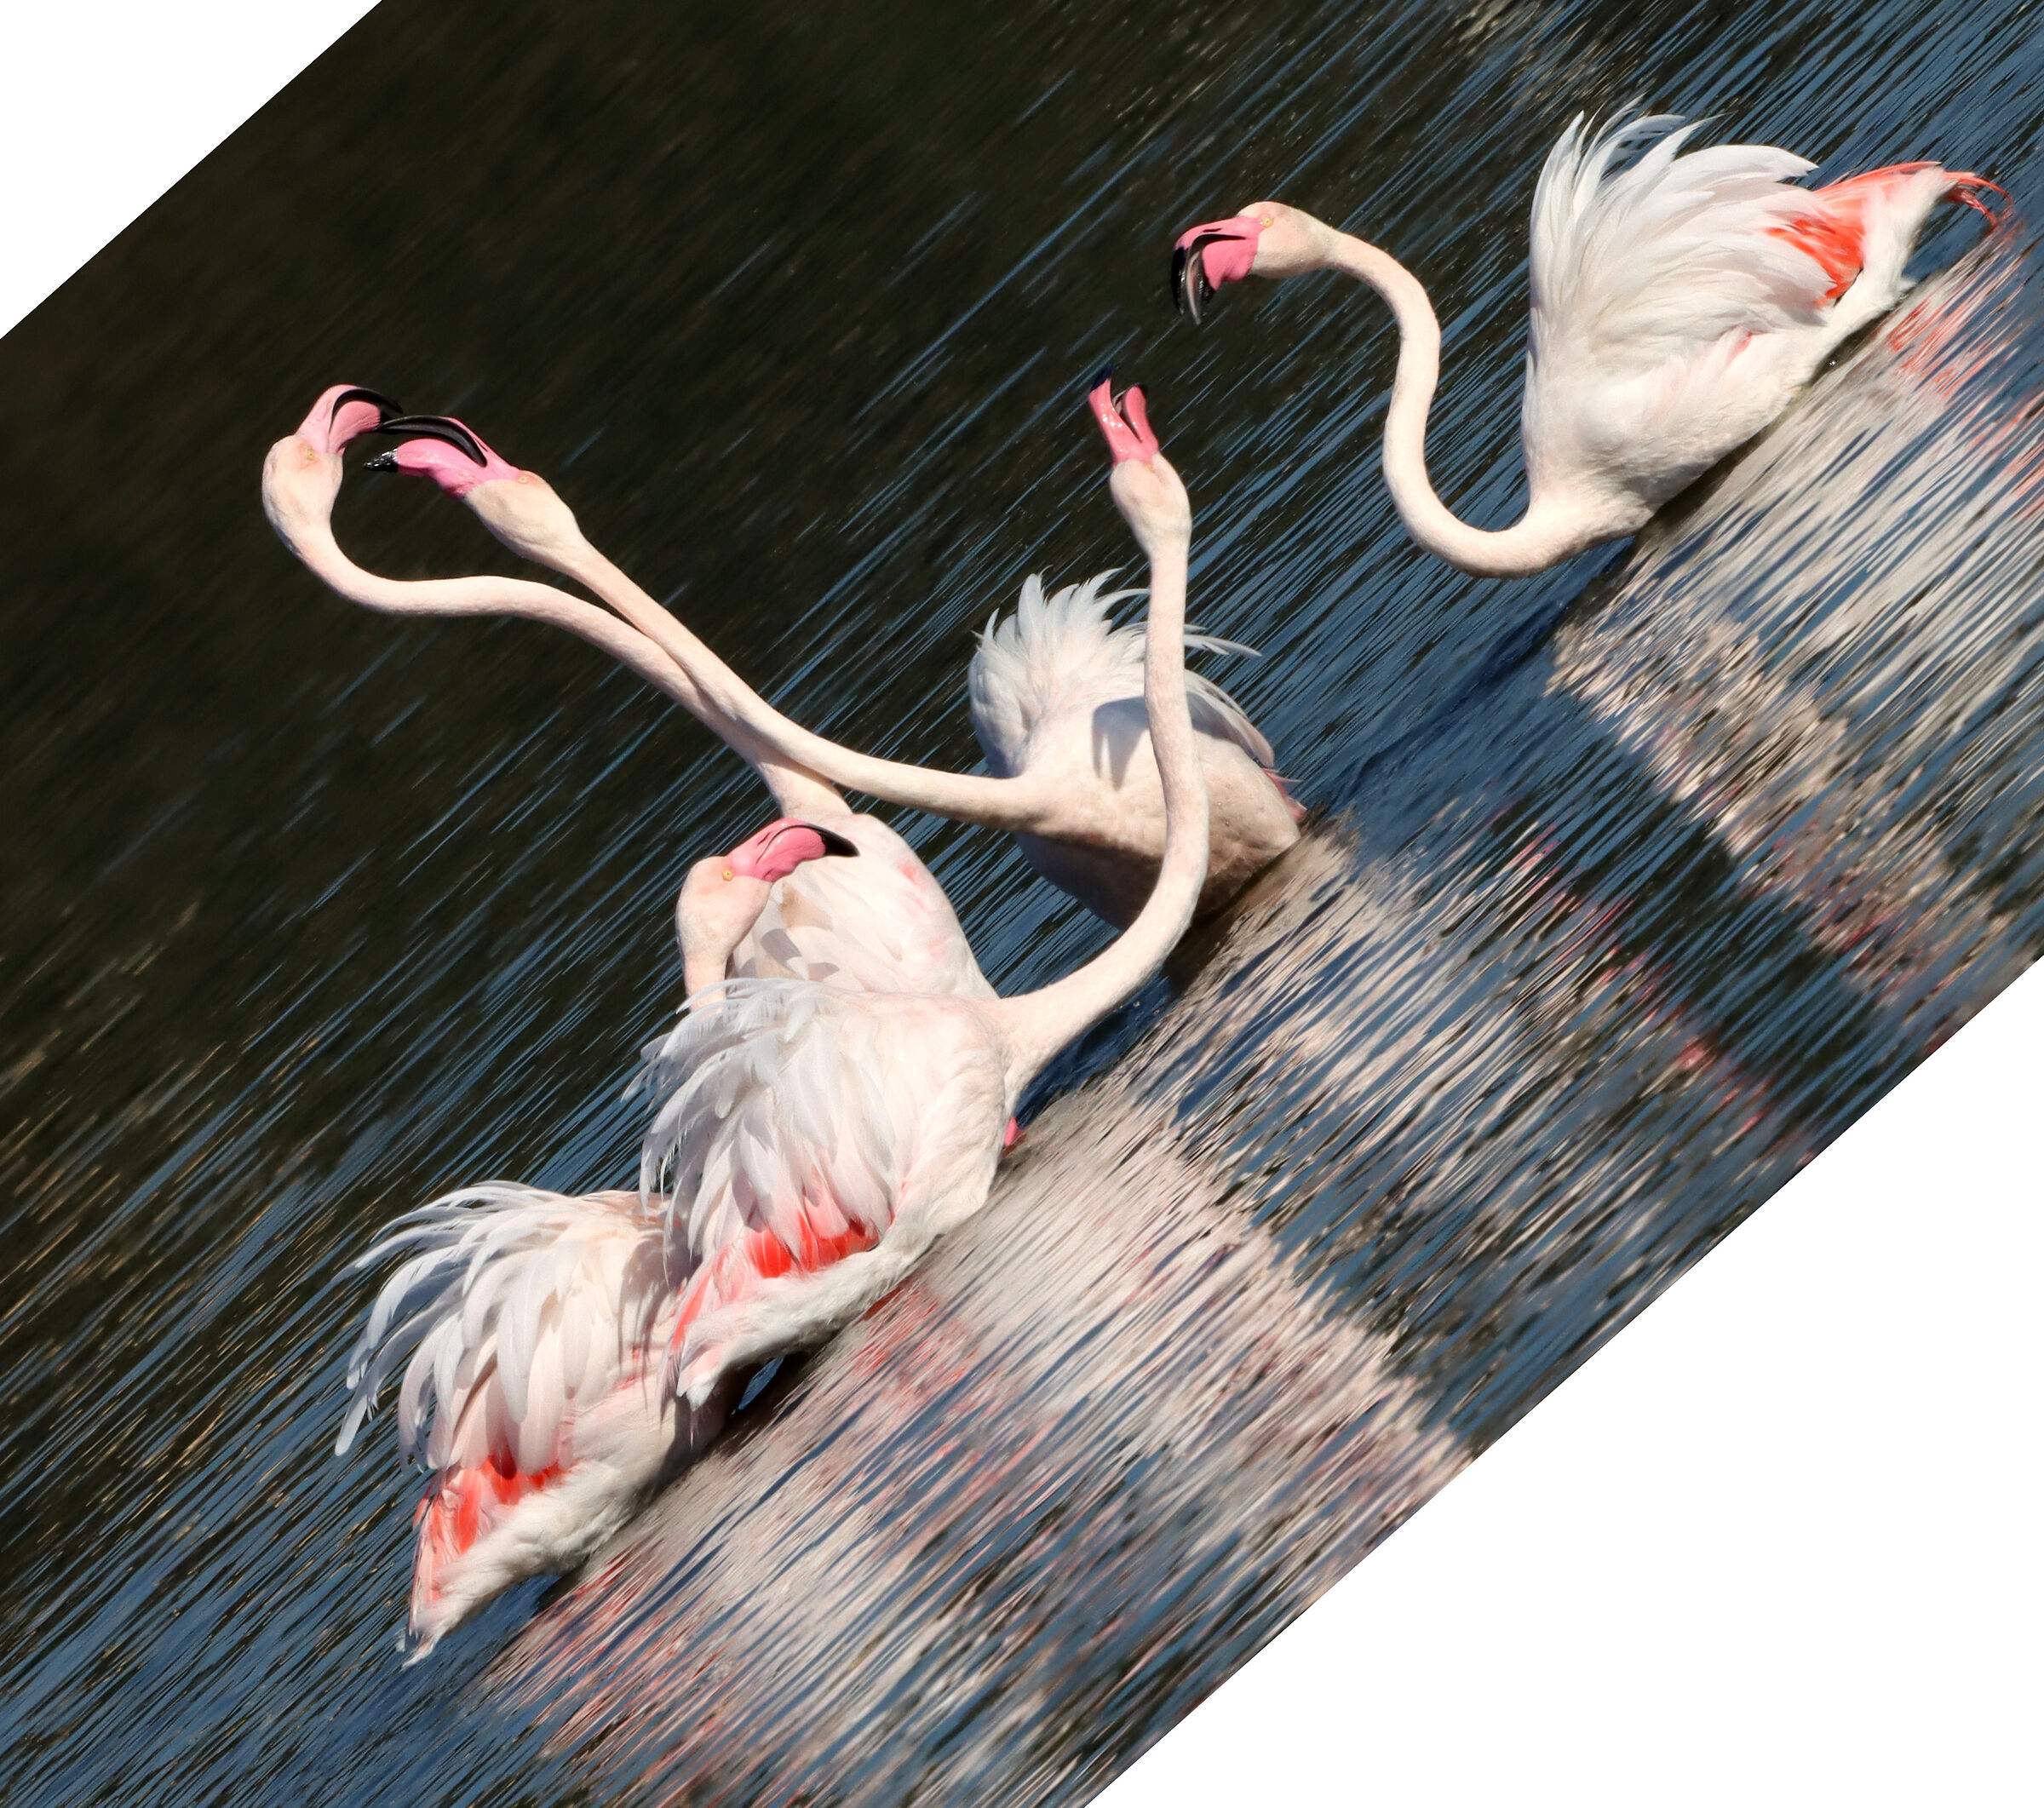 Amorous quarrels of Pink Flamingos to the "strange famo!"....